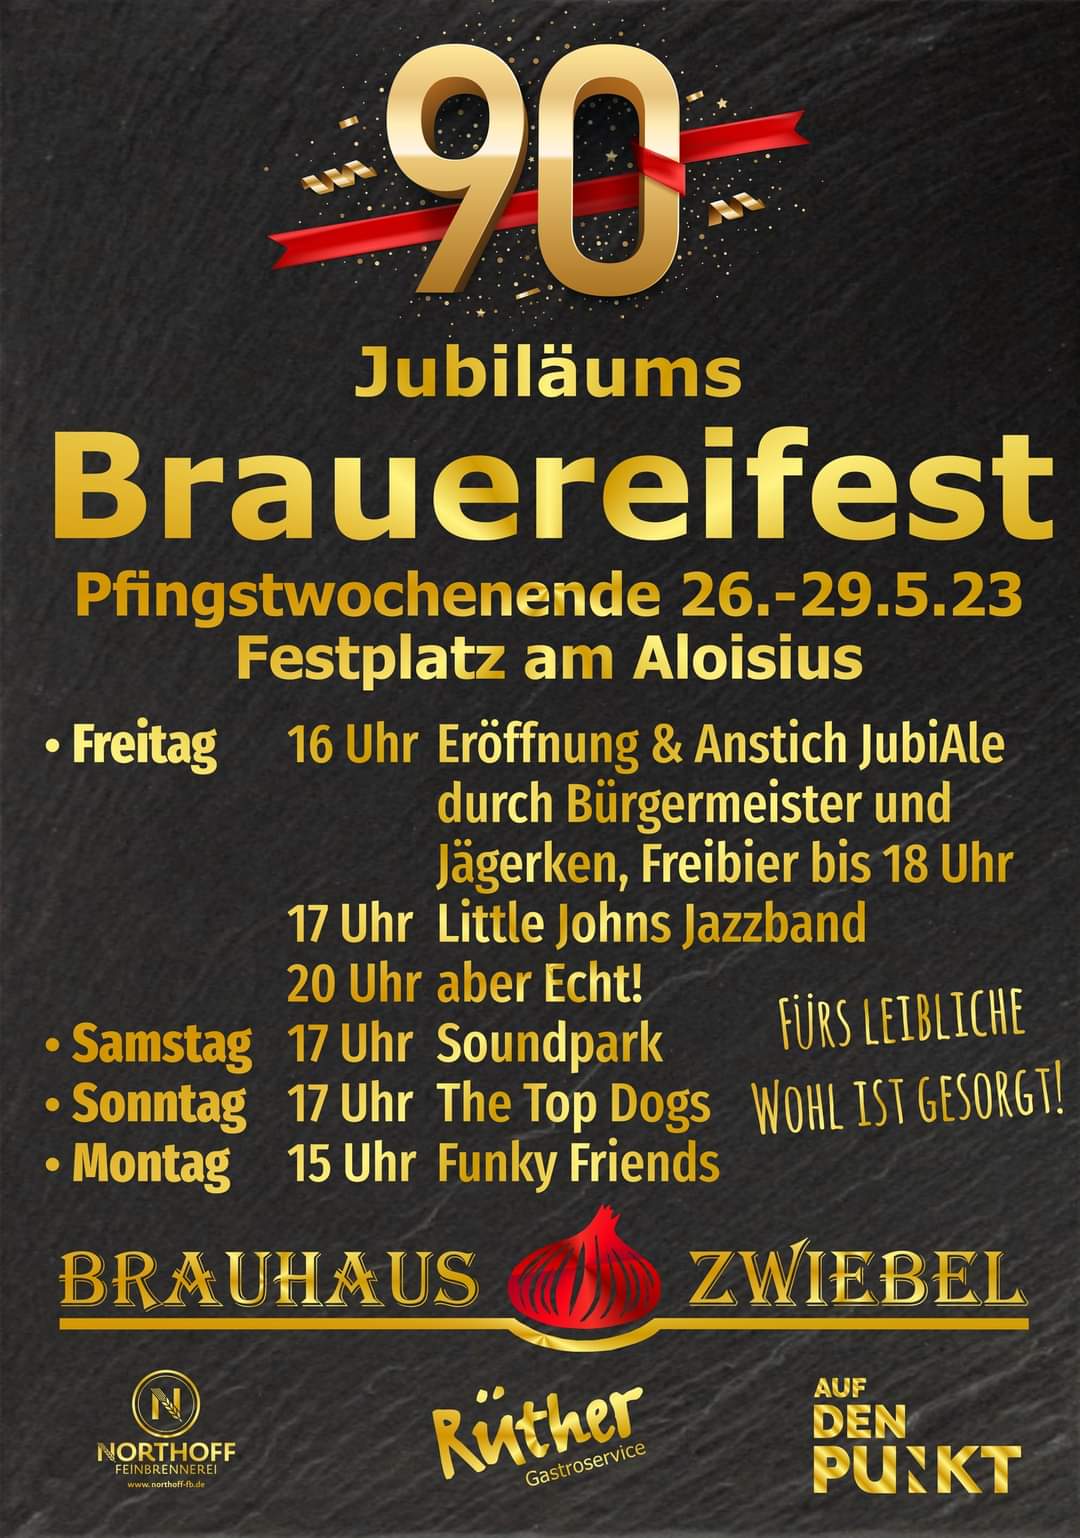 Hopfentee-Liebhaber willkommen: Brauhaus Zwiebel in Soest feiert an Pfingsten Jubiläums-Brauereifest